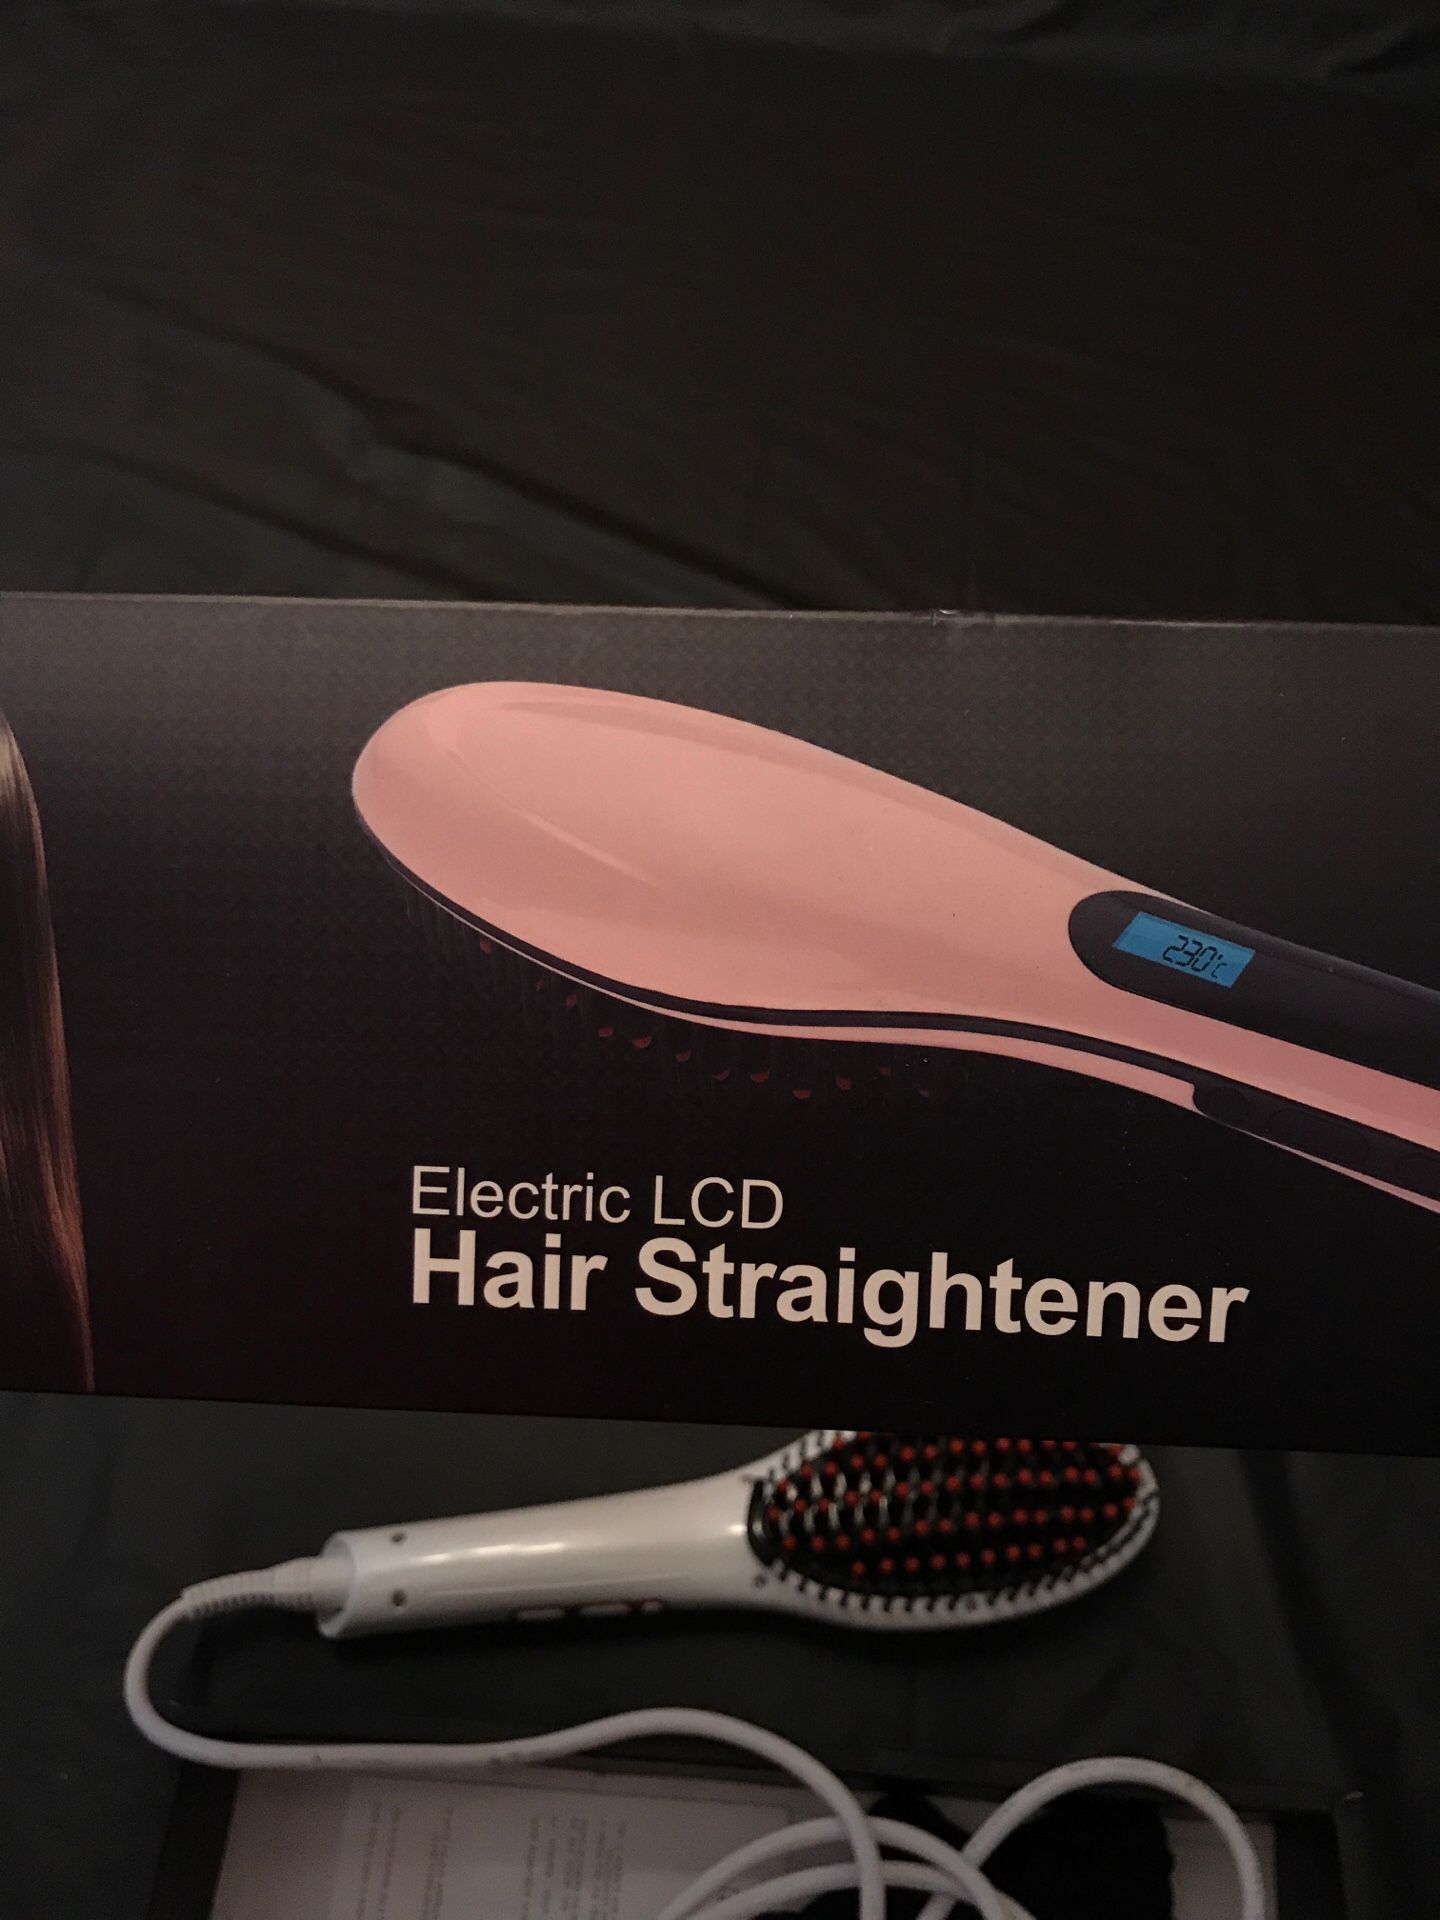 Electric LCD Hair Straightener